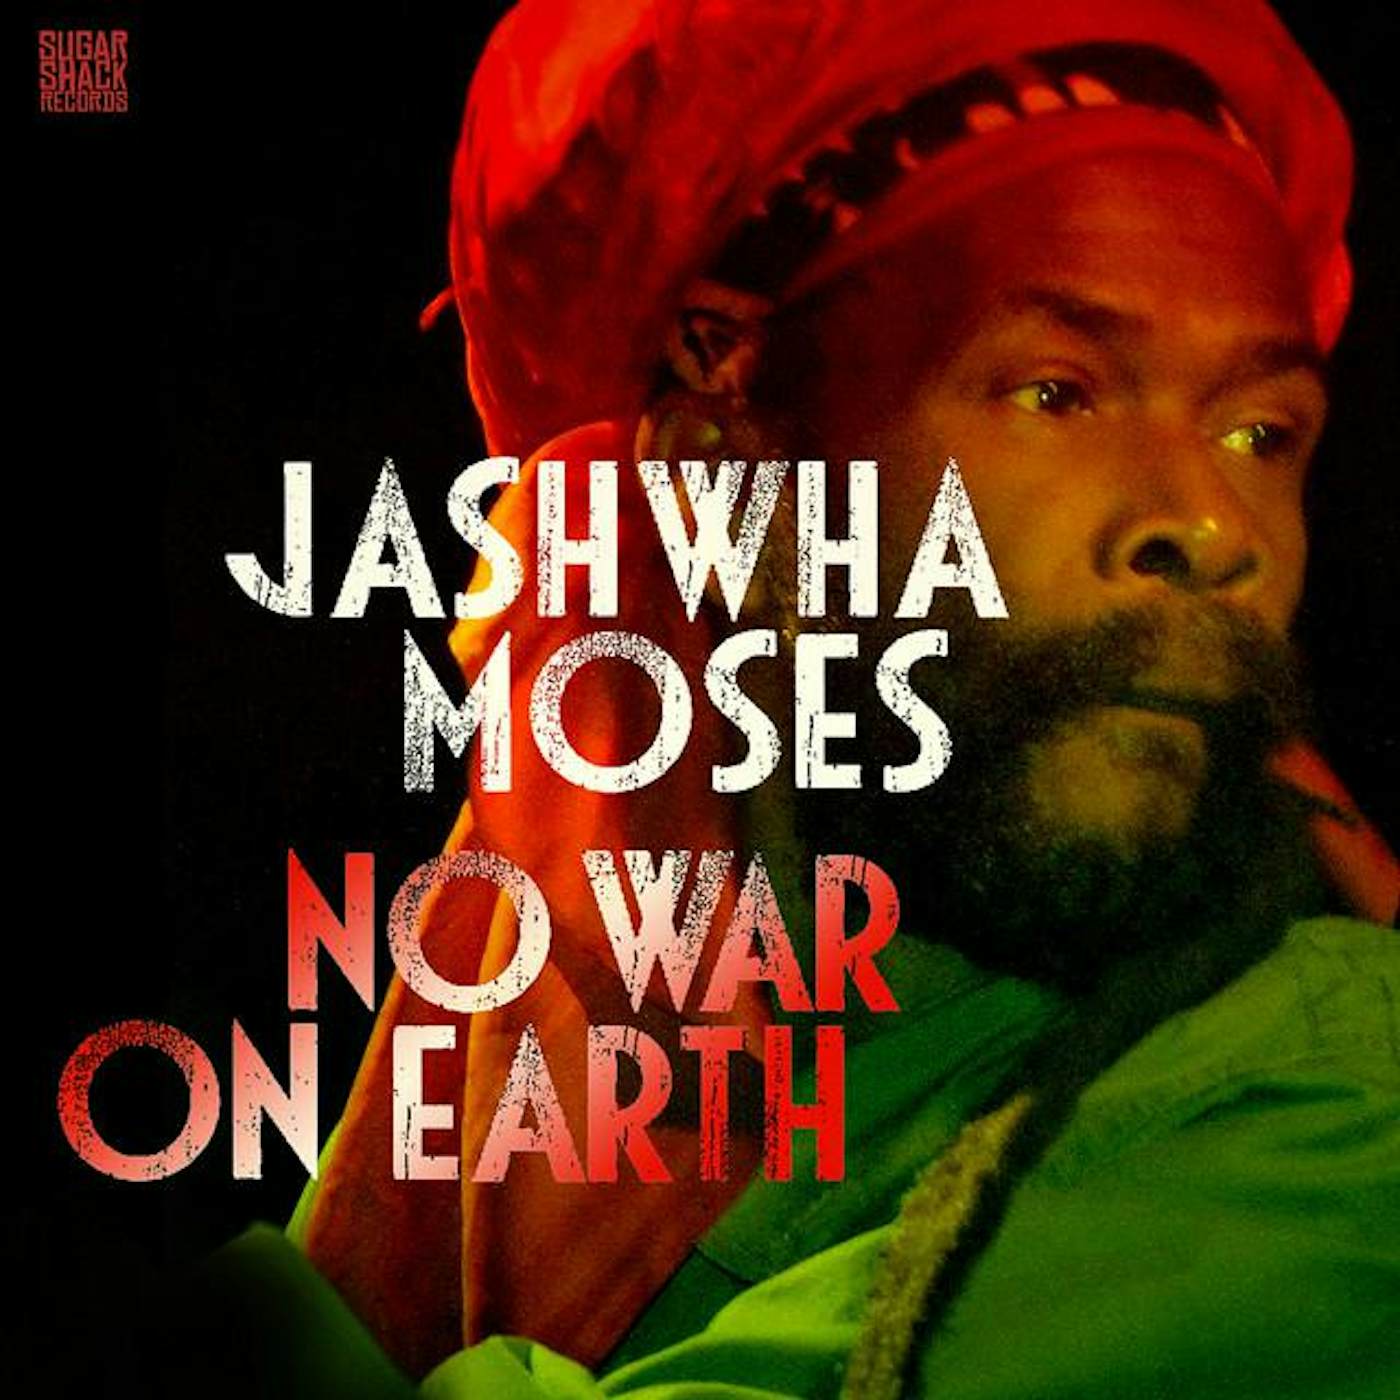 Jashwha Moses